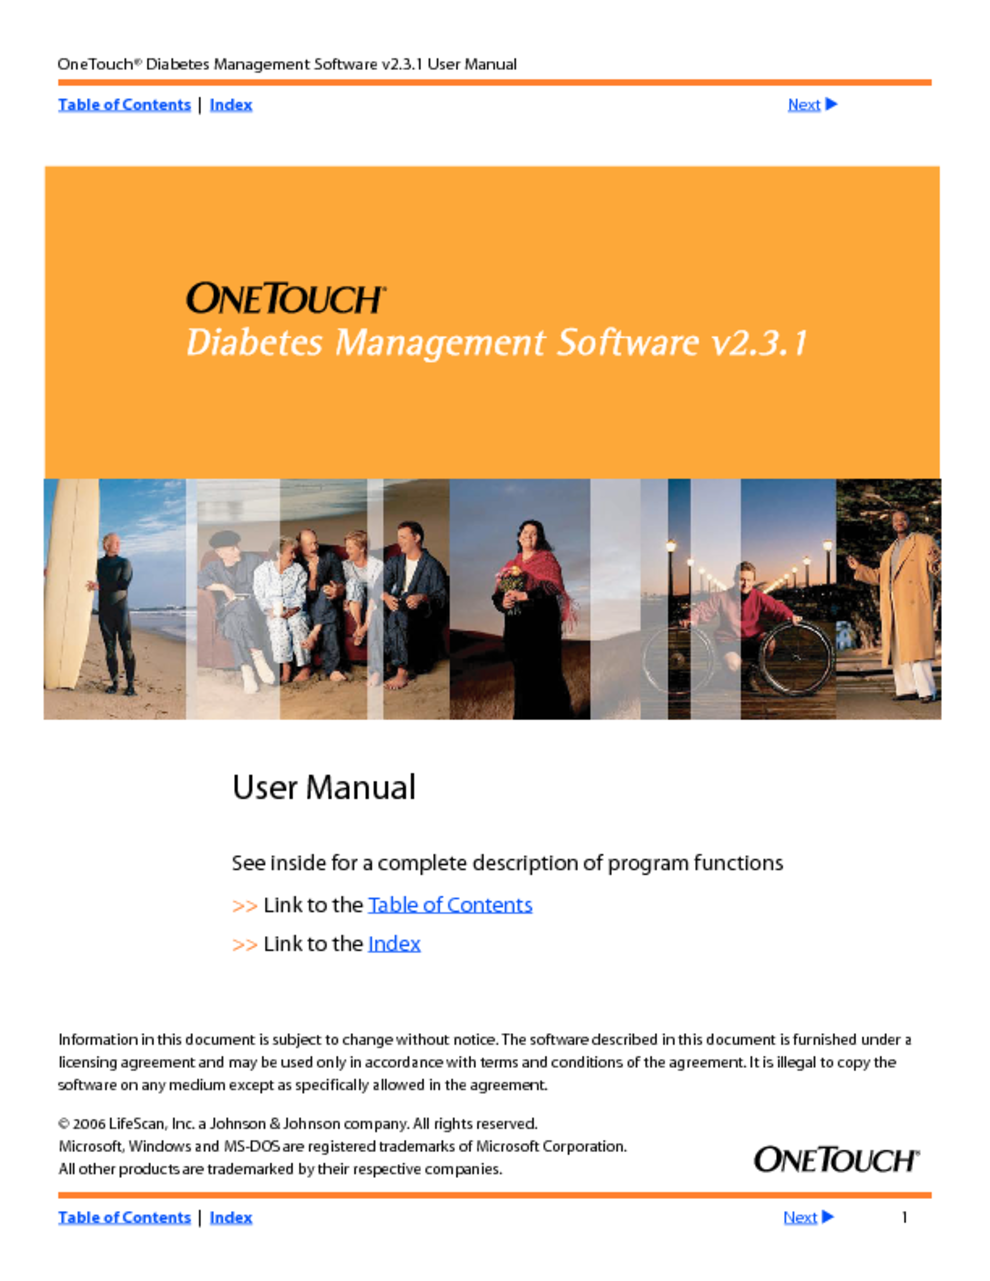 onetouch diabetes management software v2.3.3